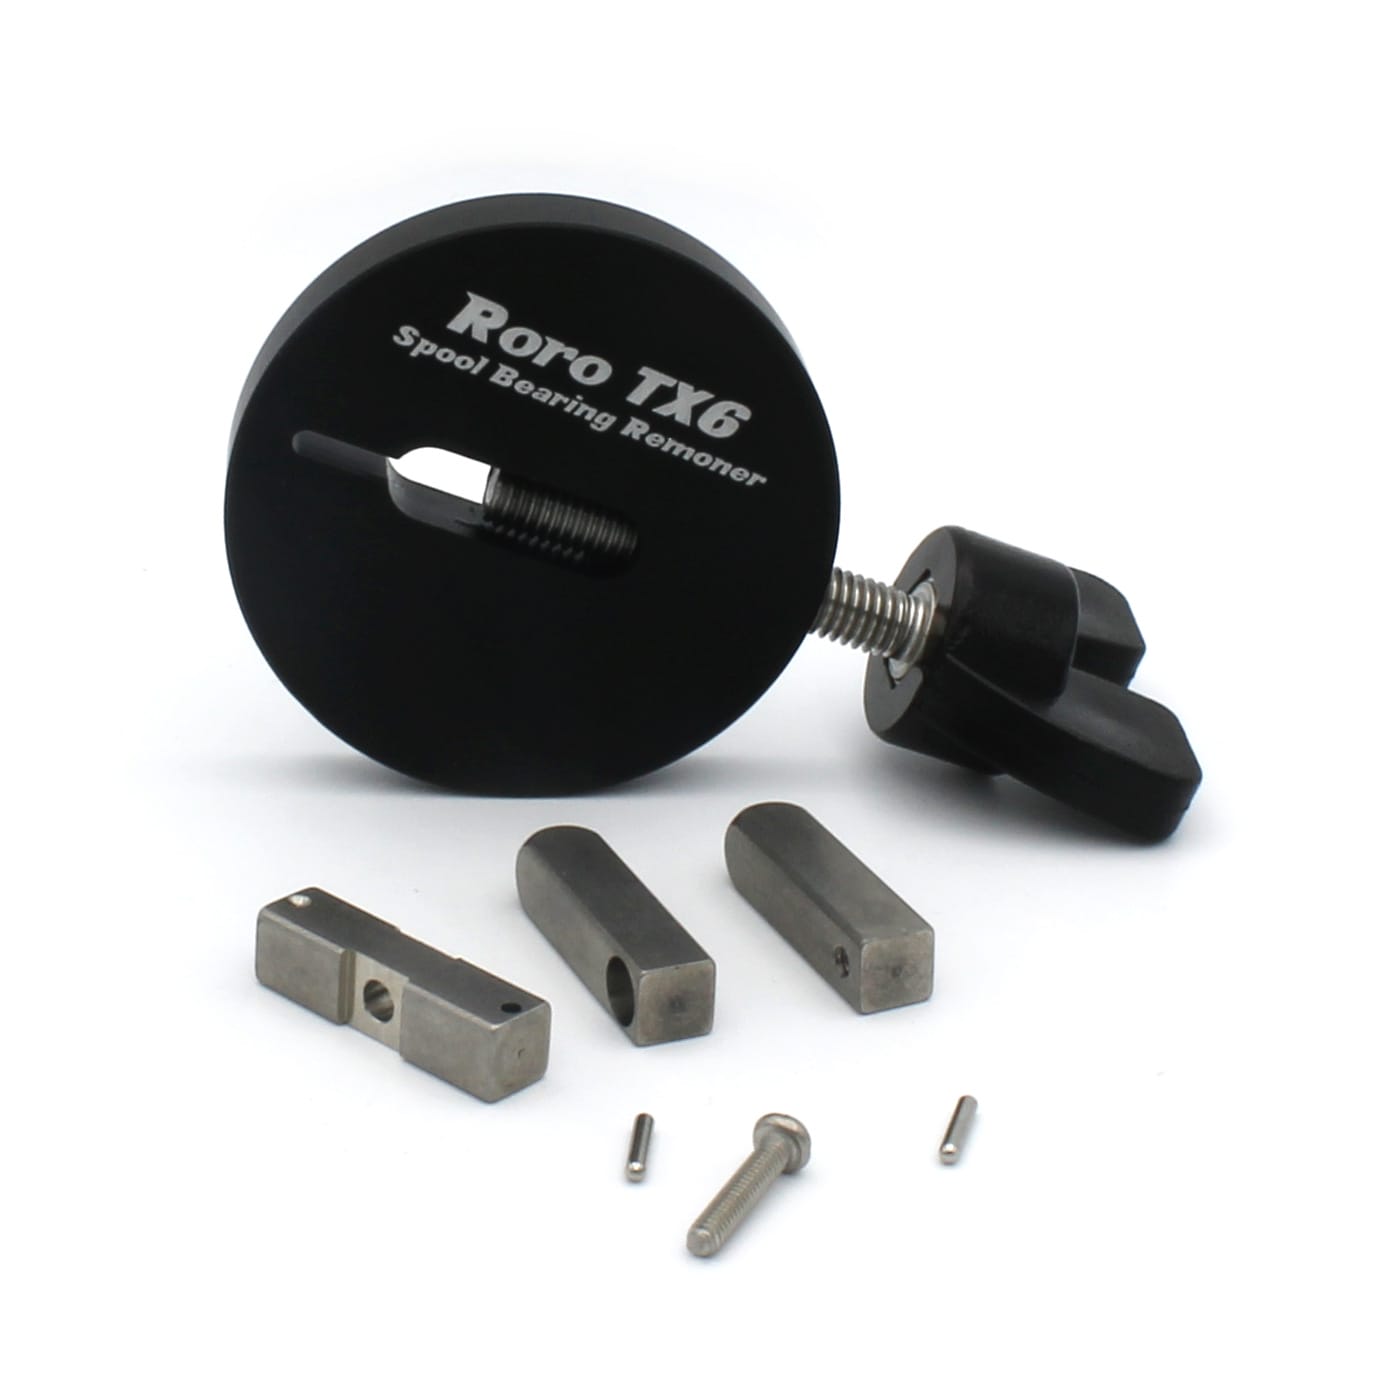 Diy Reel Bearing Pin Remover Kit Dismantling Device Spool Pin